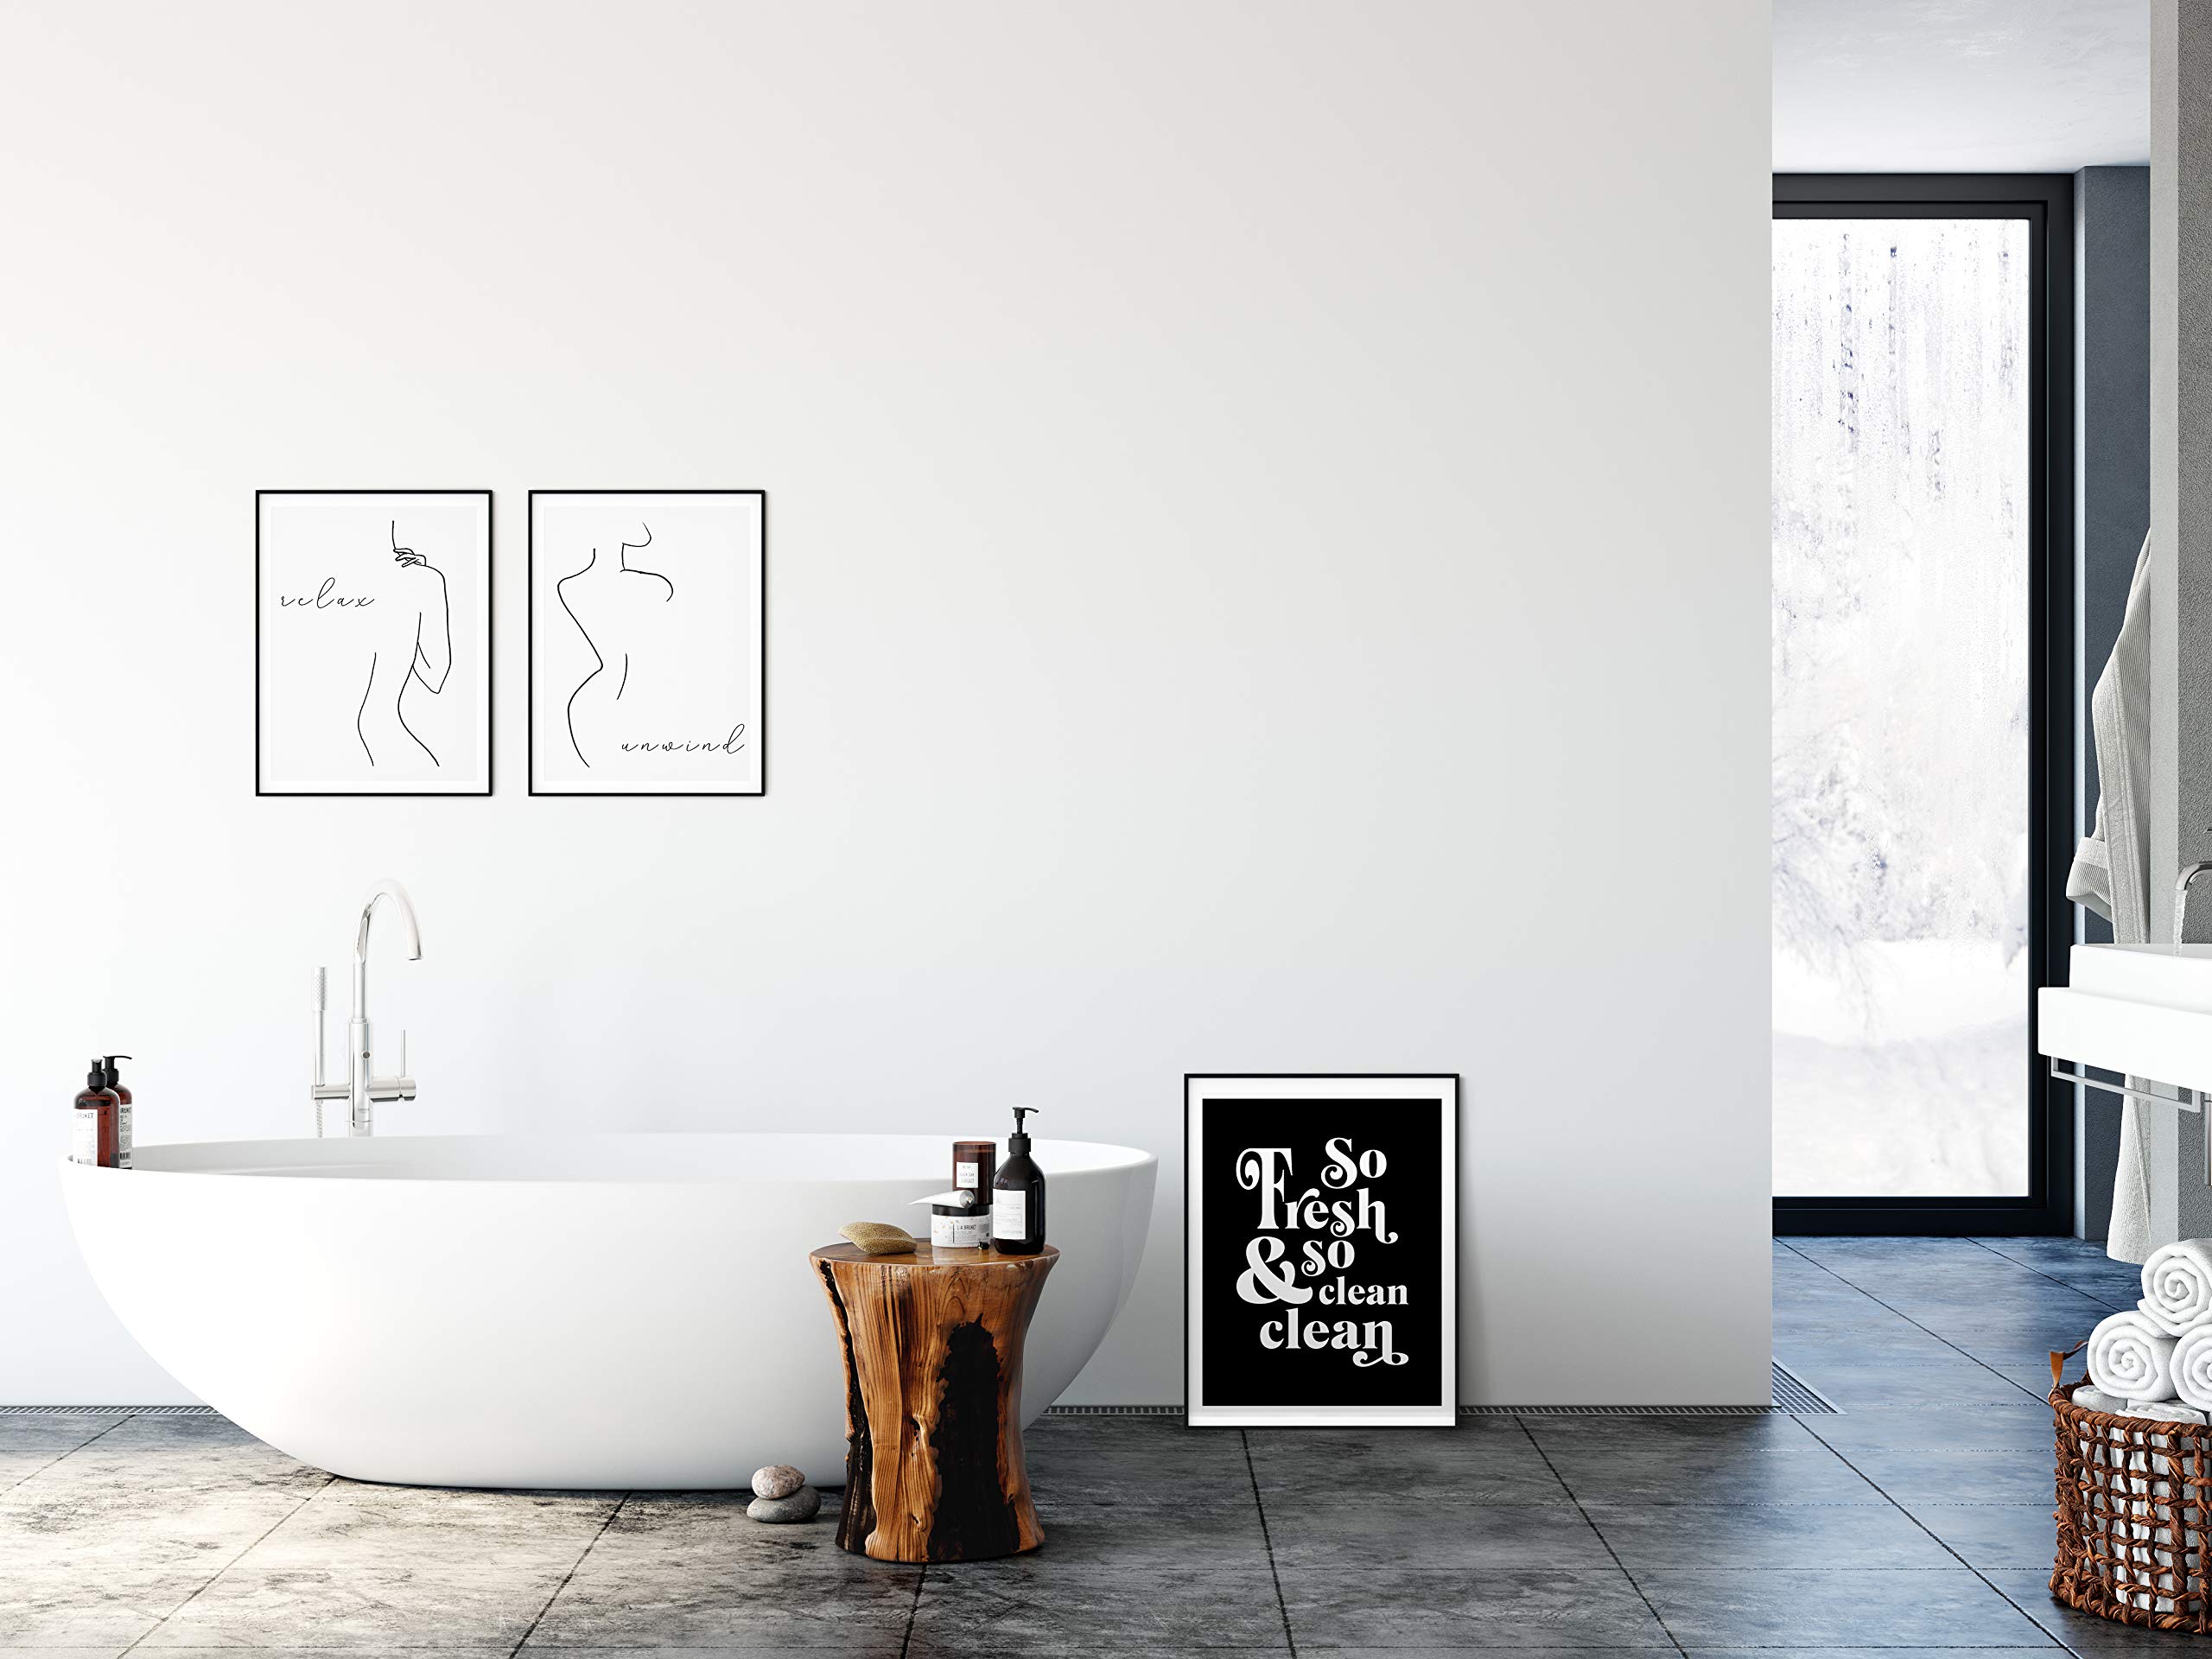 So Fresh And So Clean Clean Wall Art - 11x14" UNFRAMED Print - Black & White Typography Bathroom Wall Decor - Funny Bathroom Decor